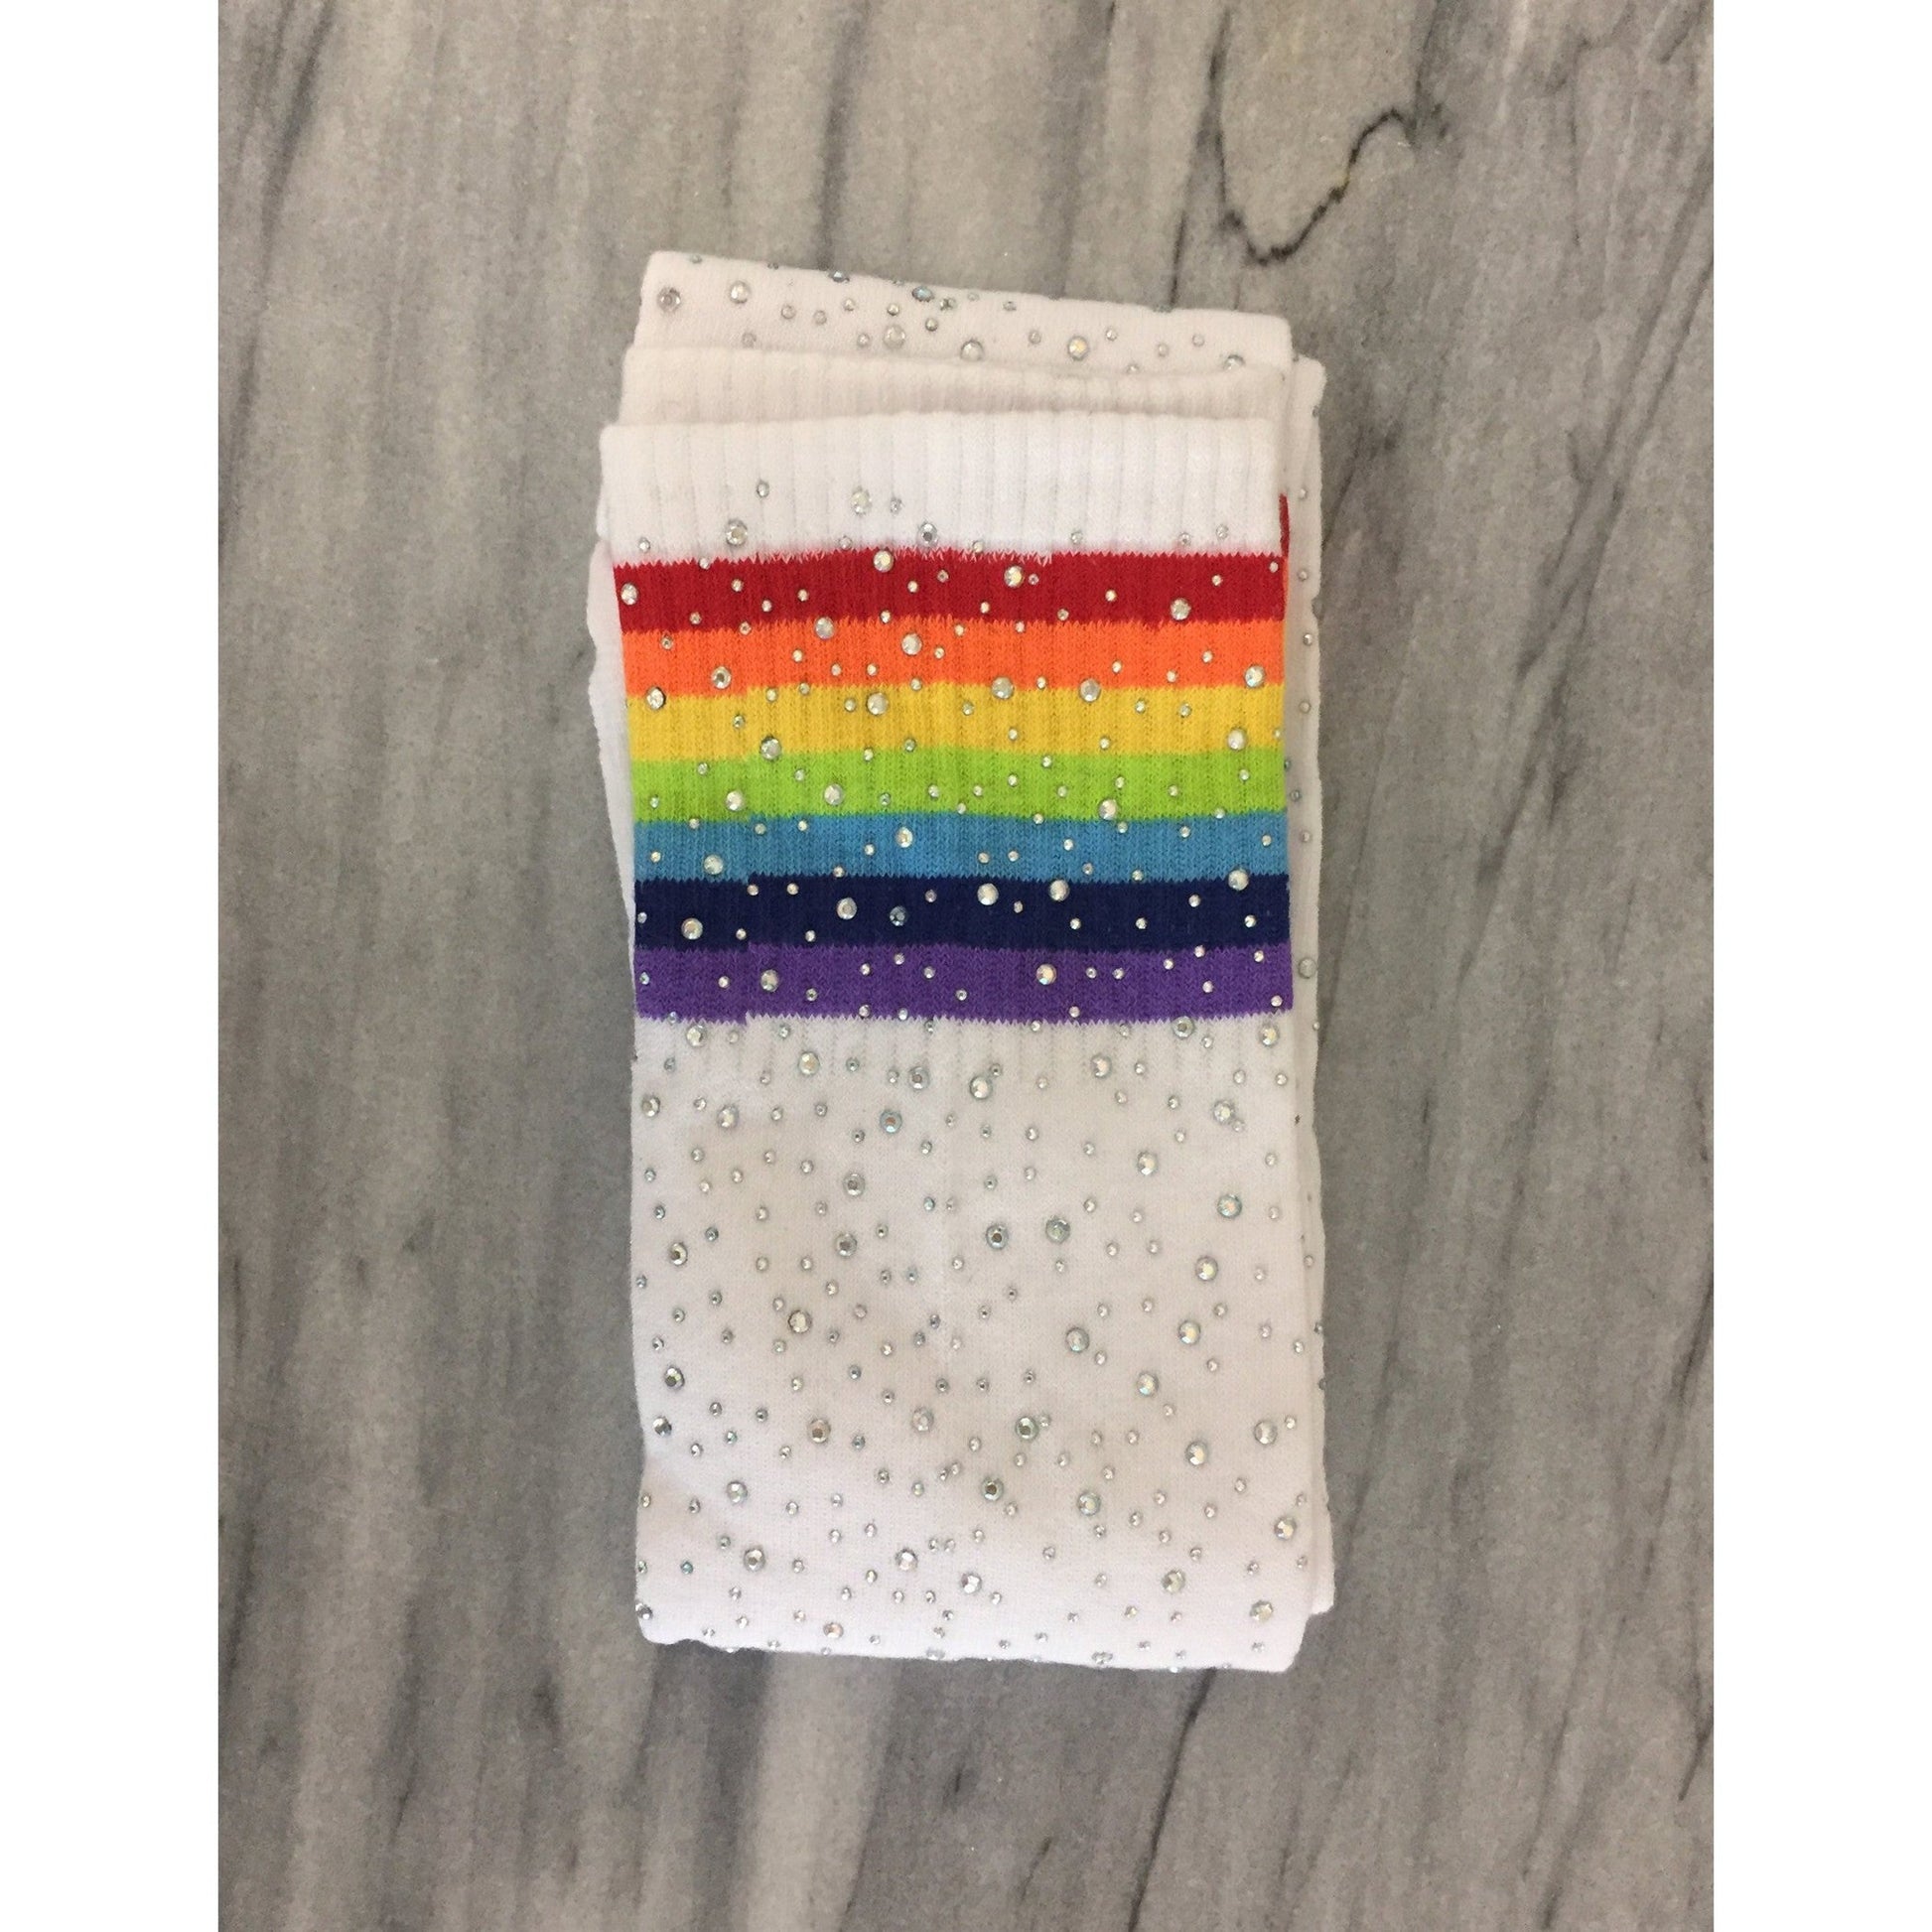 Over the Knee Jeweled Rainbow Glam Disco Socks (Black or White Rainbow)